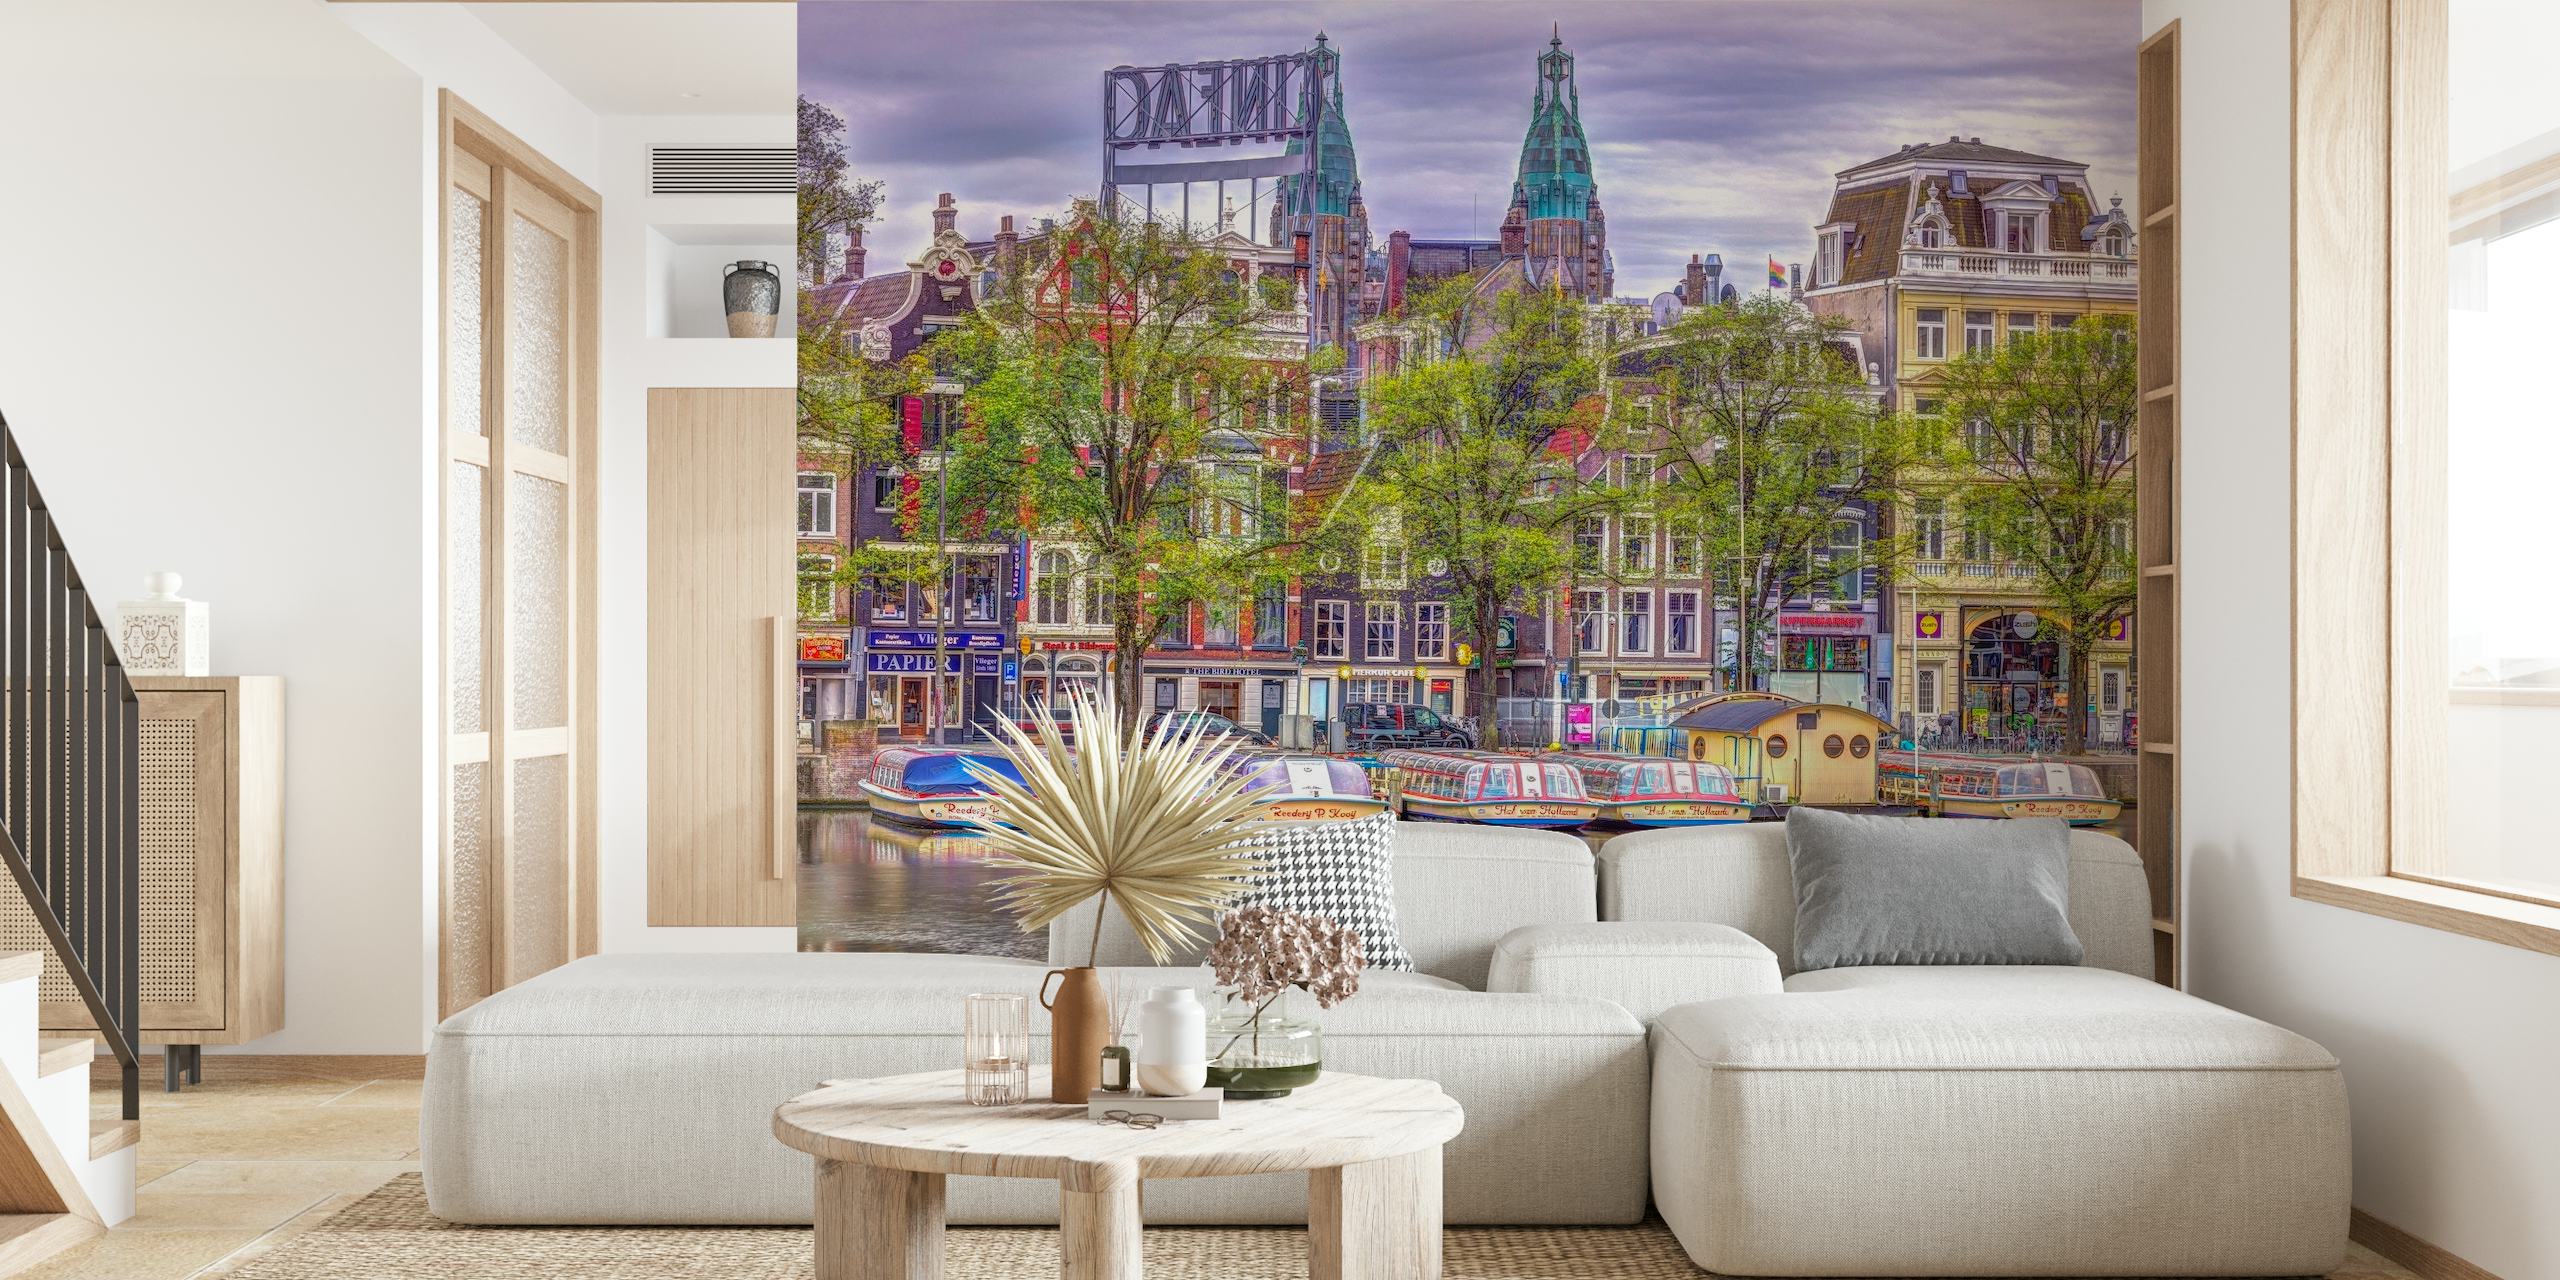 Amsterdam waterfront papel pintado